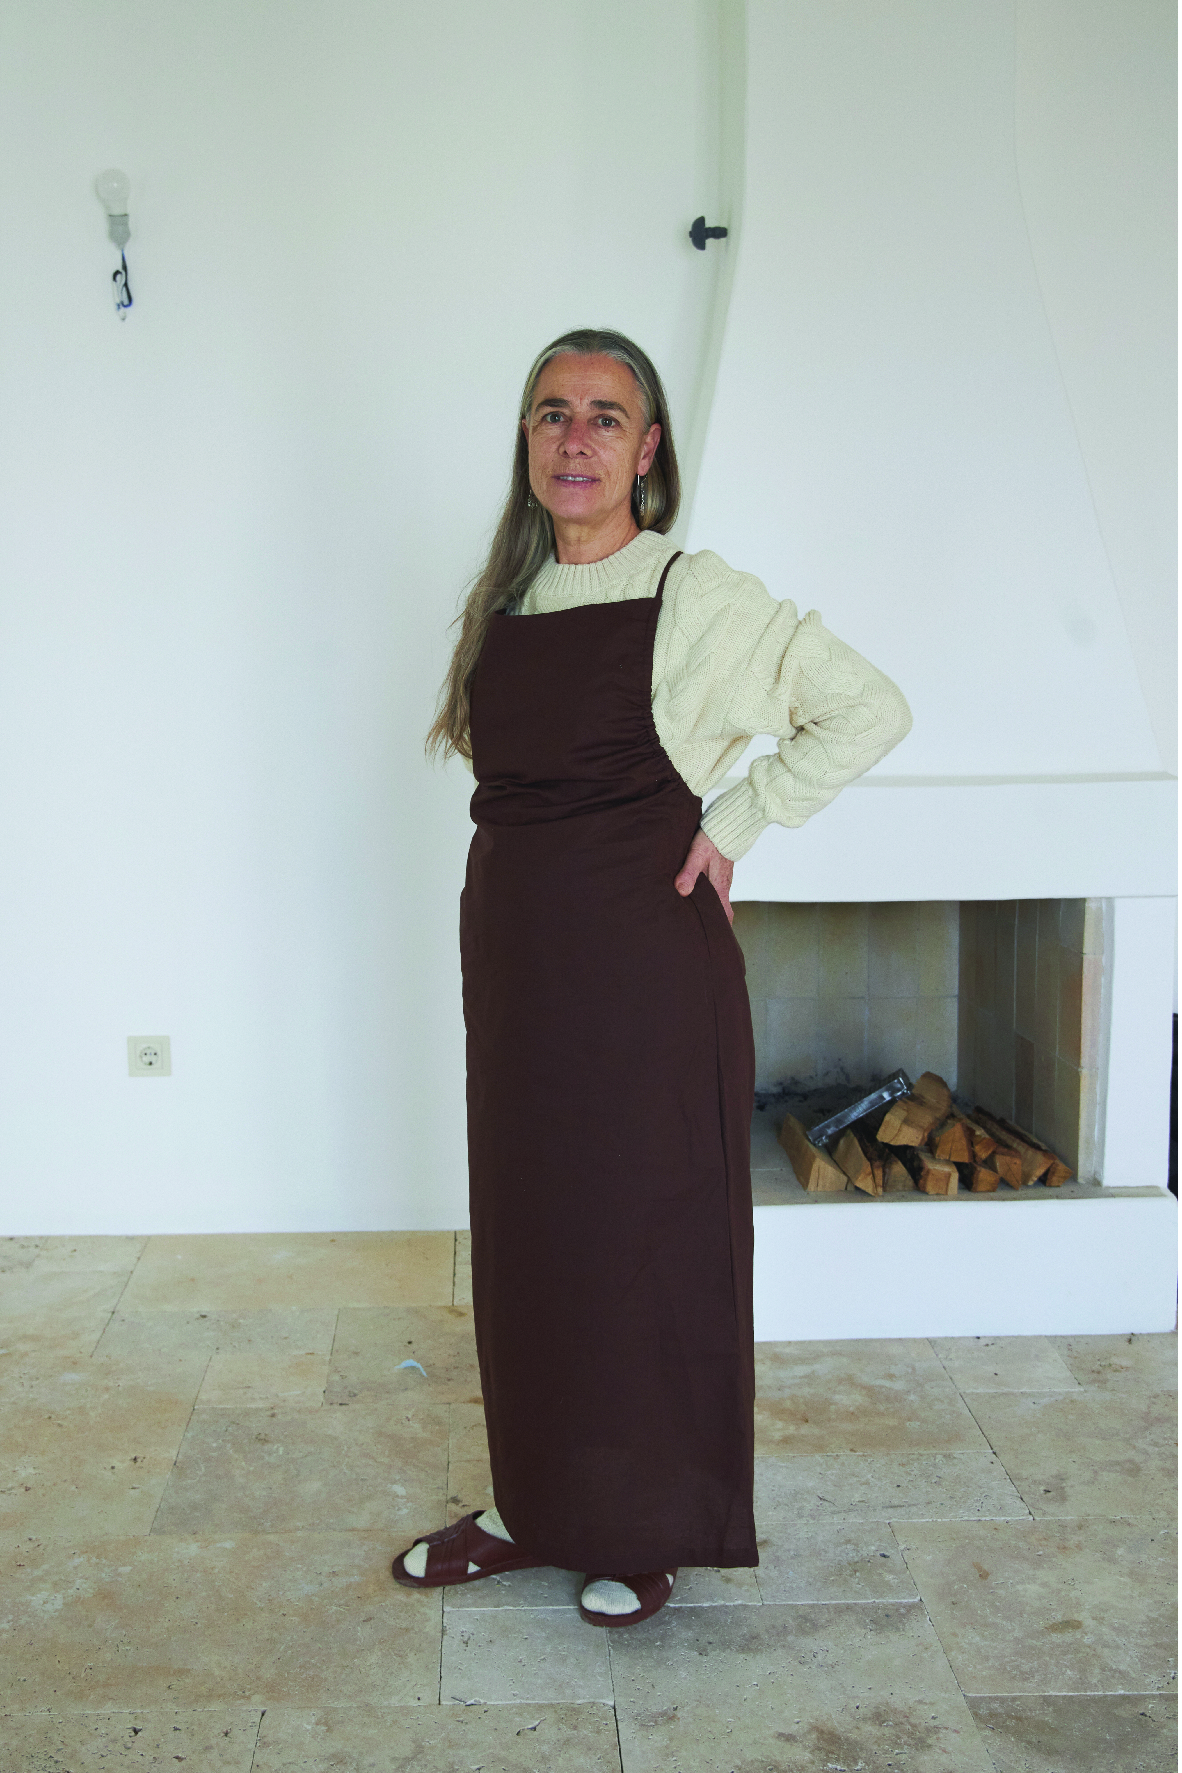 eba halter dress brown, organic cotton poplin dress. Mid-calf length and adjustable straps.